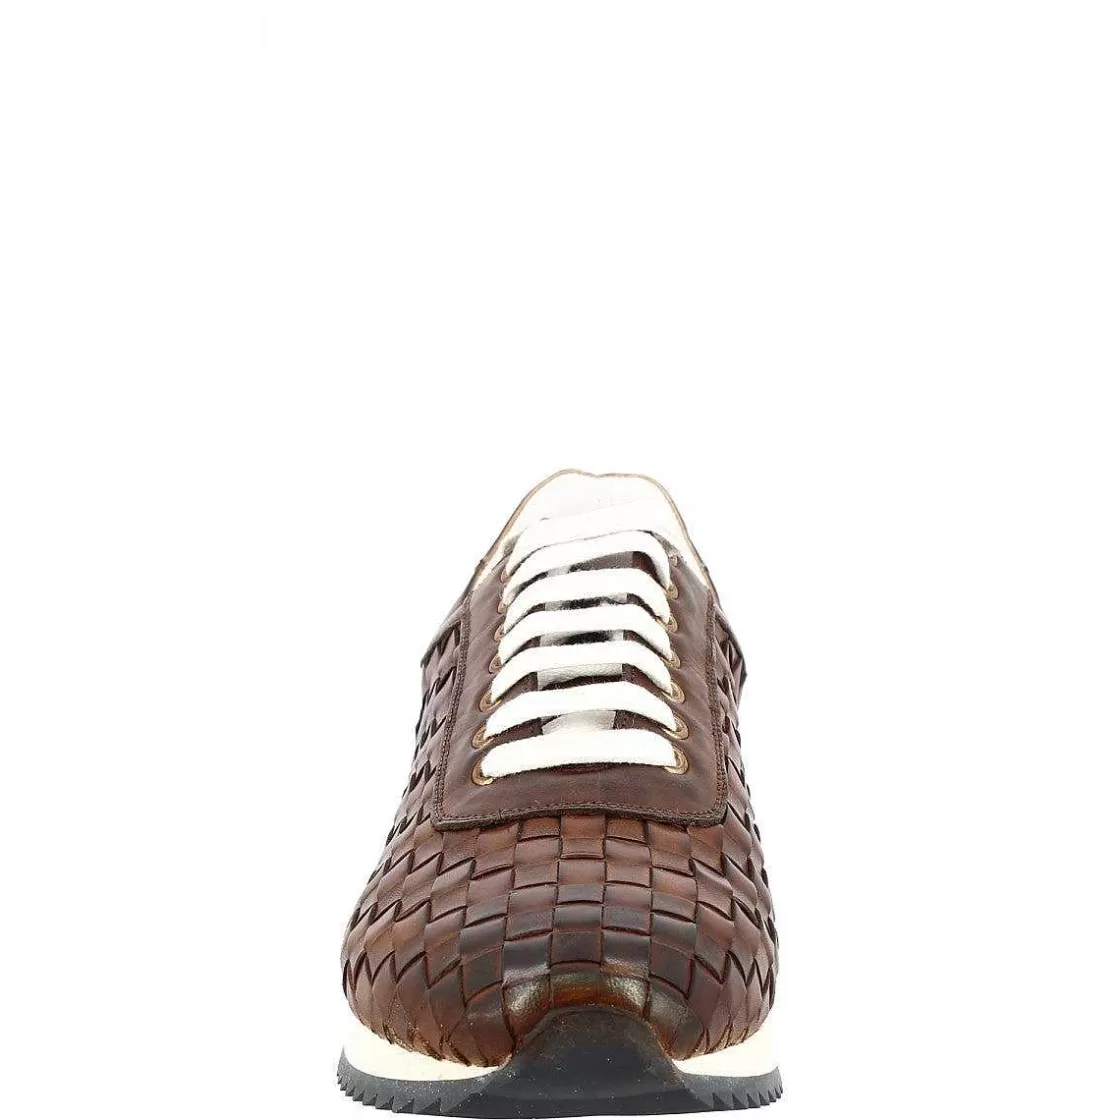 Leonardo Men'S Casual Sneakers Handmade In Brandy Woven Leather Discount